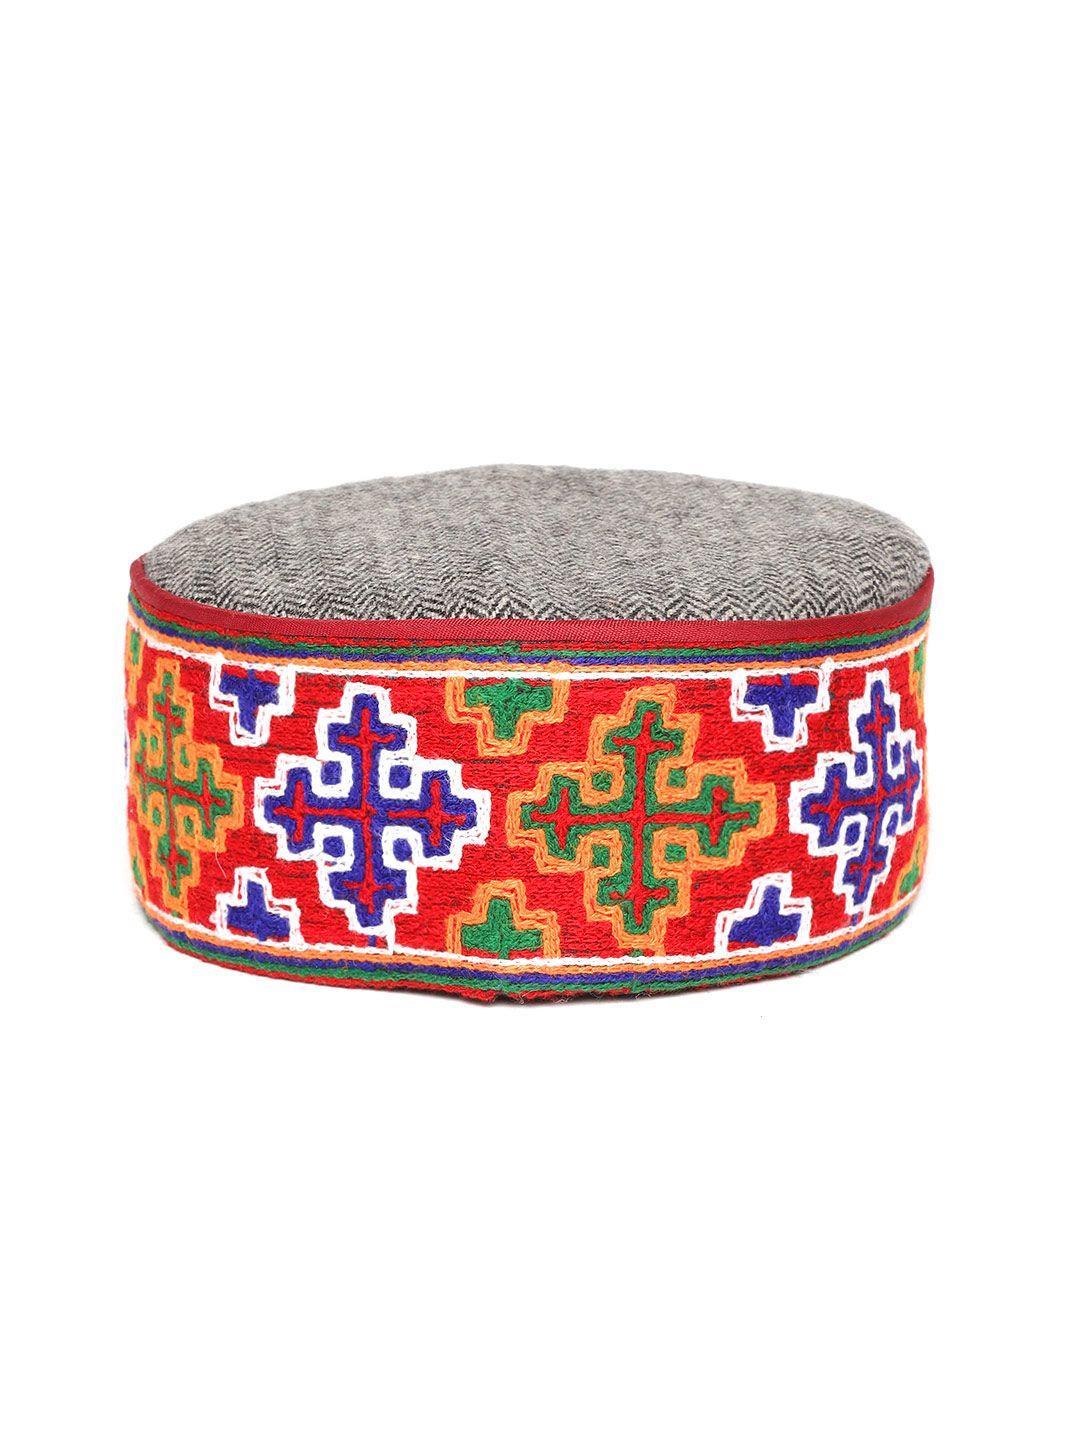 vastraa fusion unisex multicoloured embroidered woollen himachali kullu cap